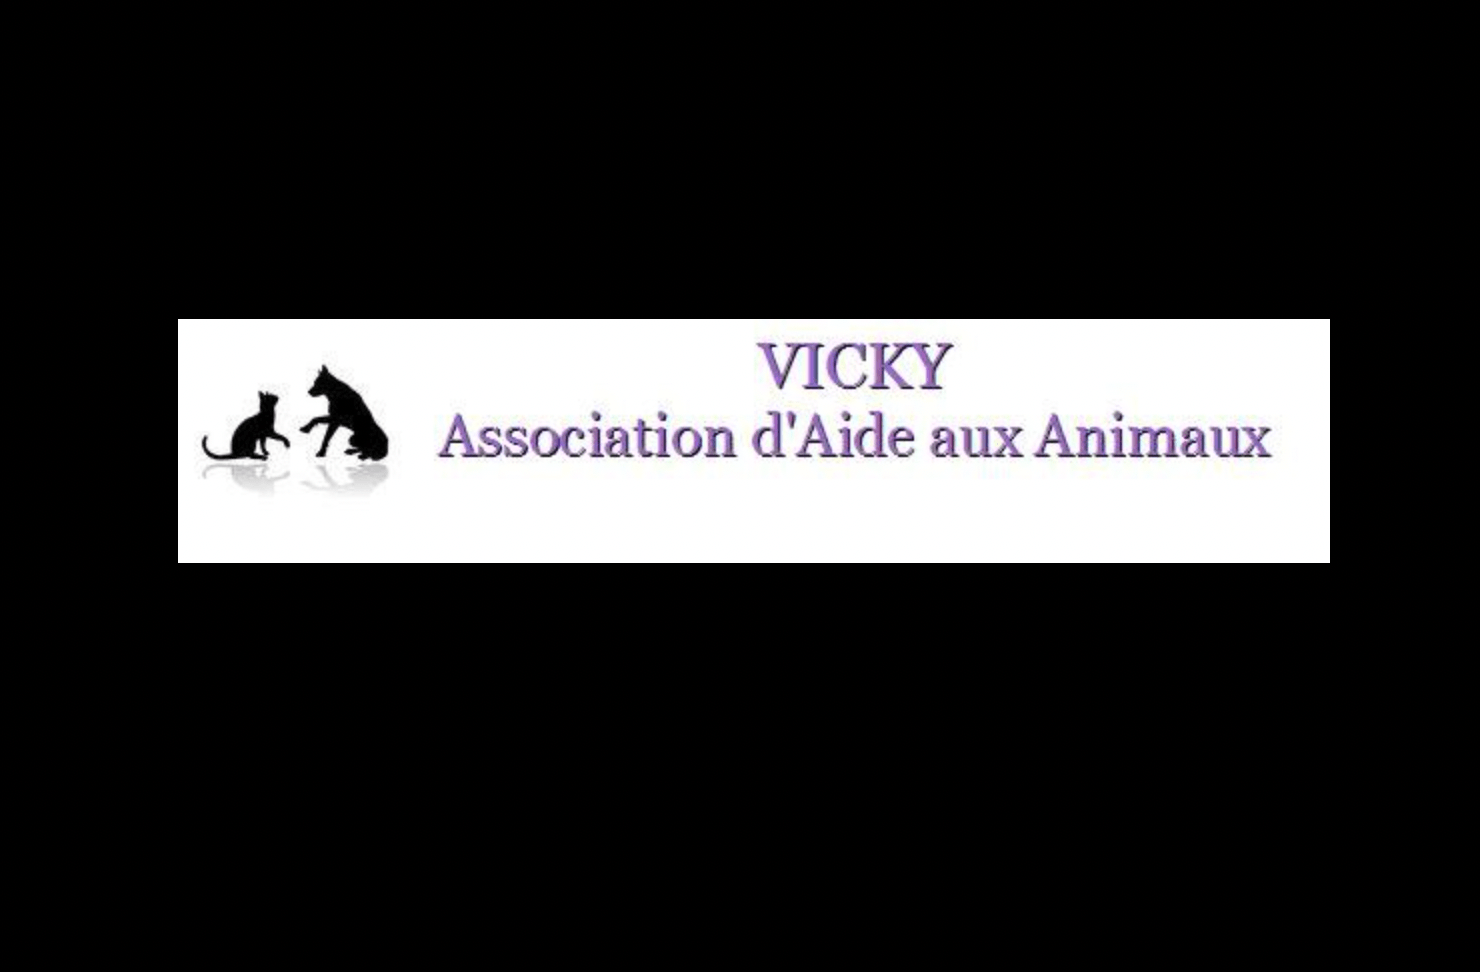 Vicky association d'aide aux animaux